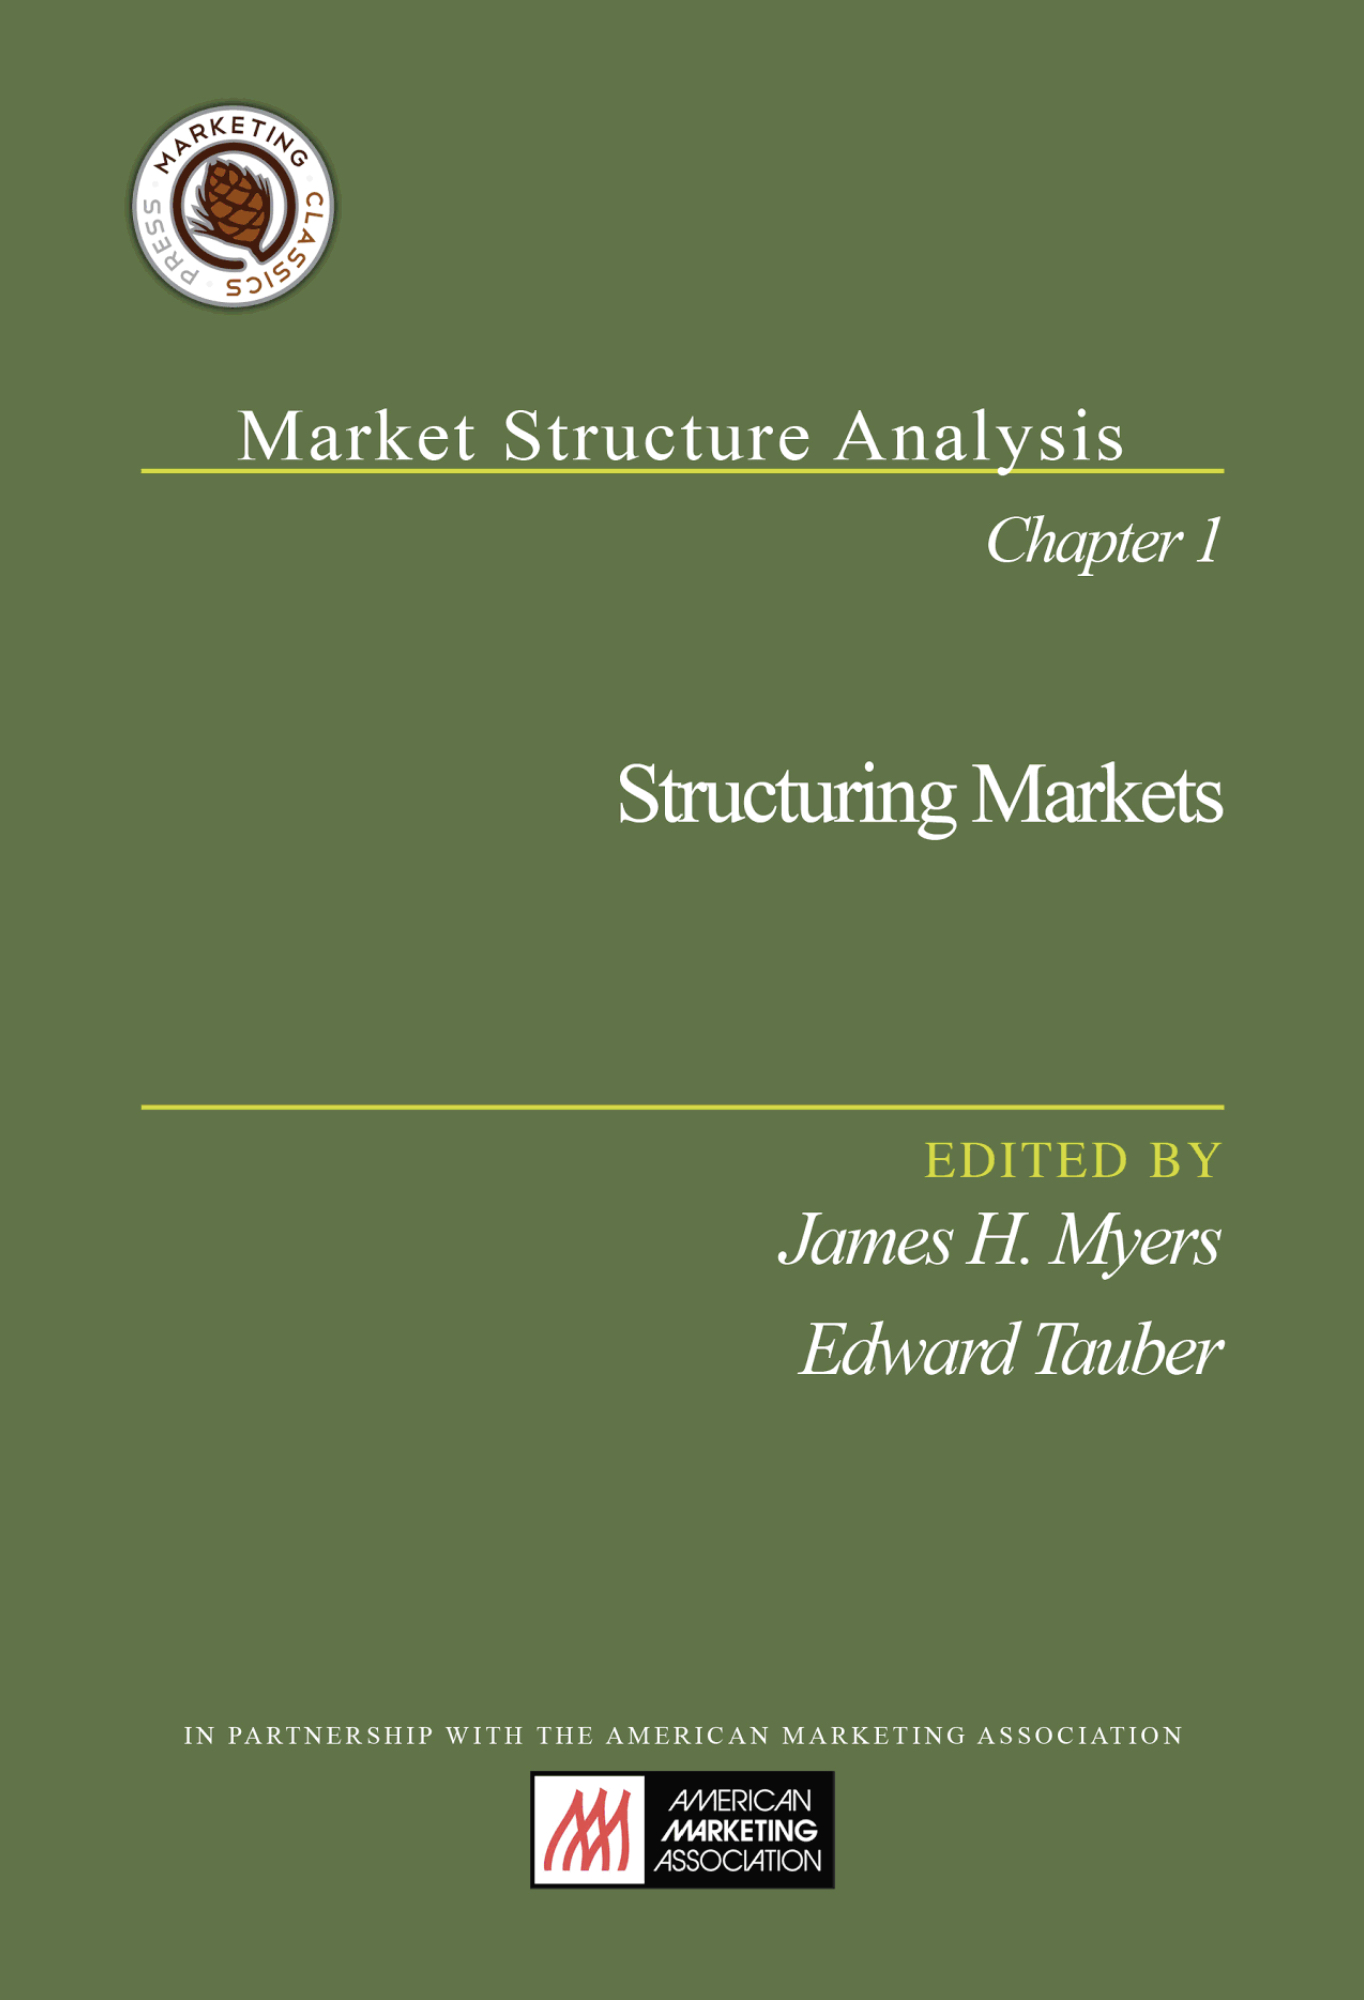 Structuring Markets